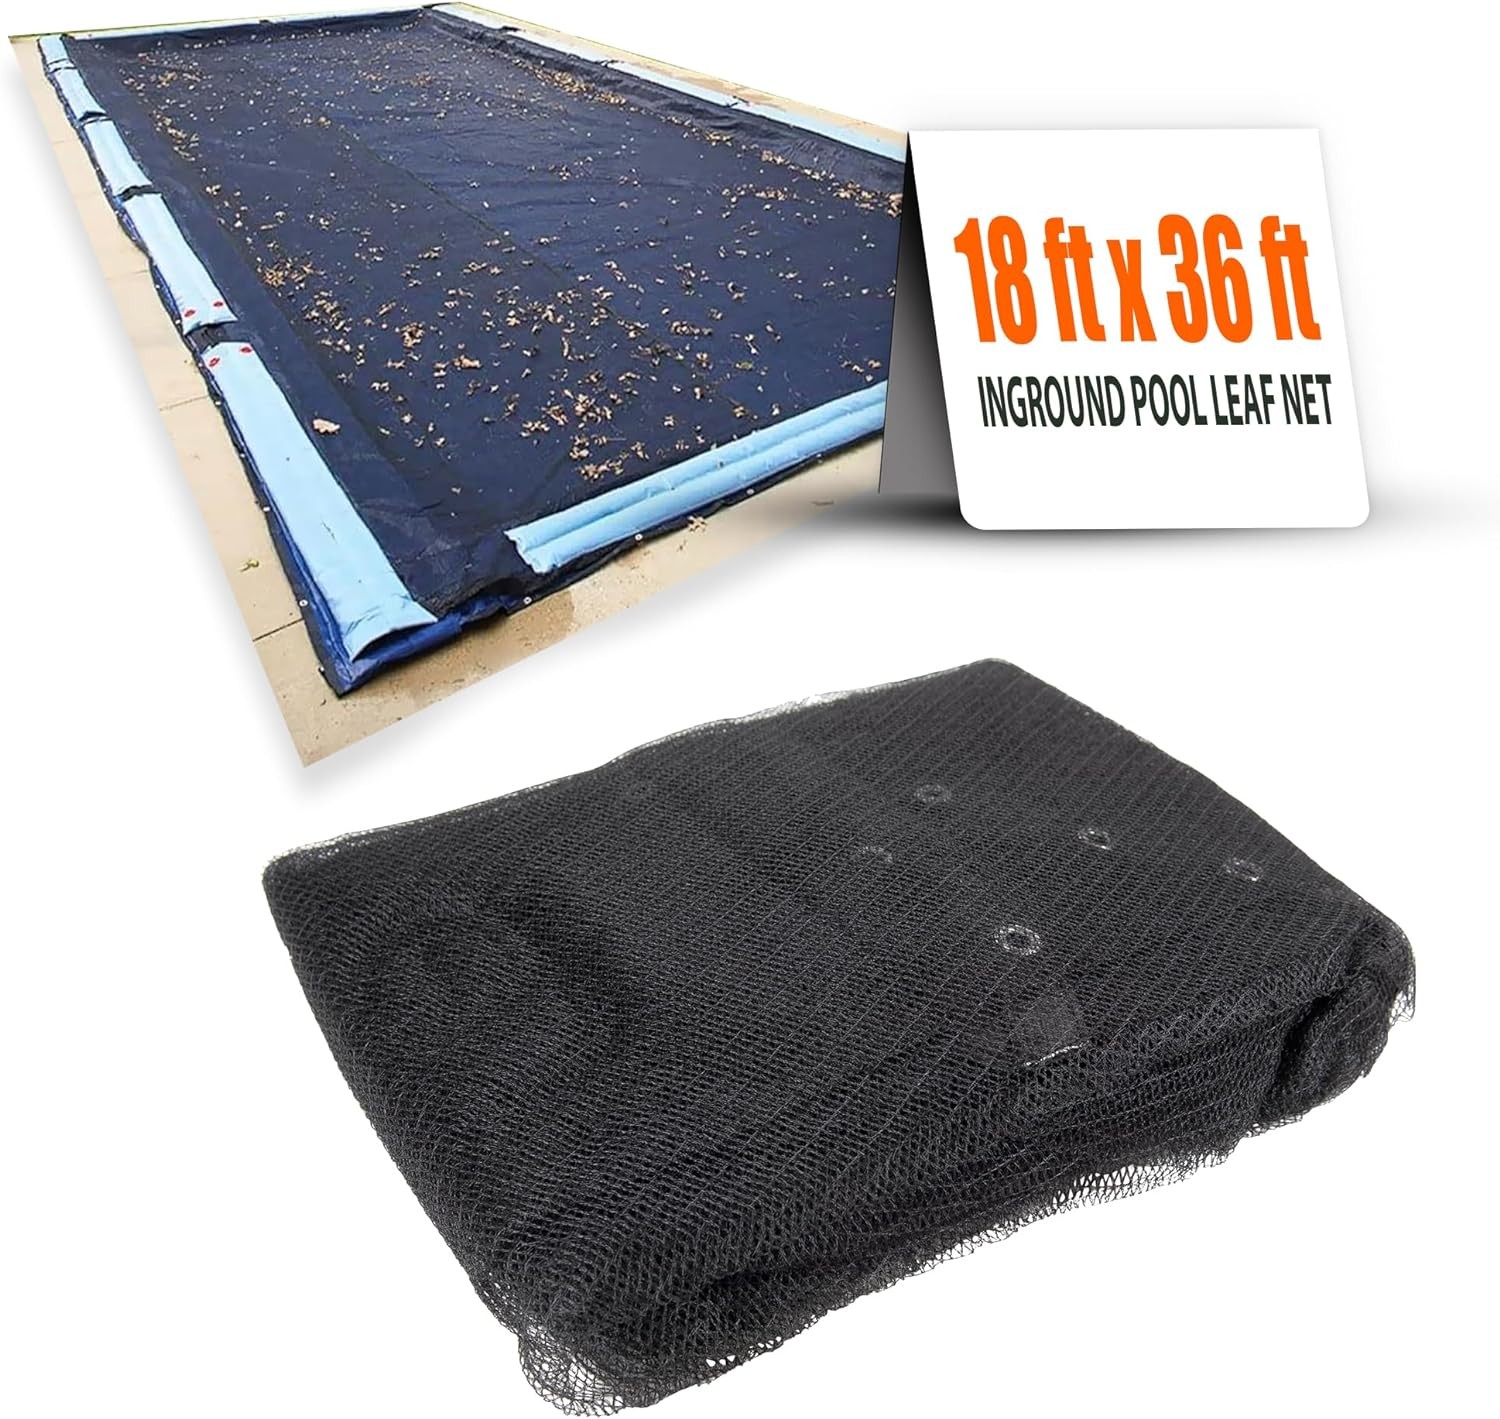 SET Sunsolar Energy Technologies Leaf Net Cover for 18 ft x 36 ft Rectangular Inground Swimming Pool with Extra 4 ft Overlap